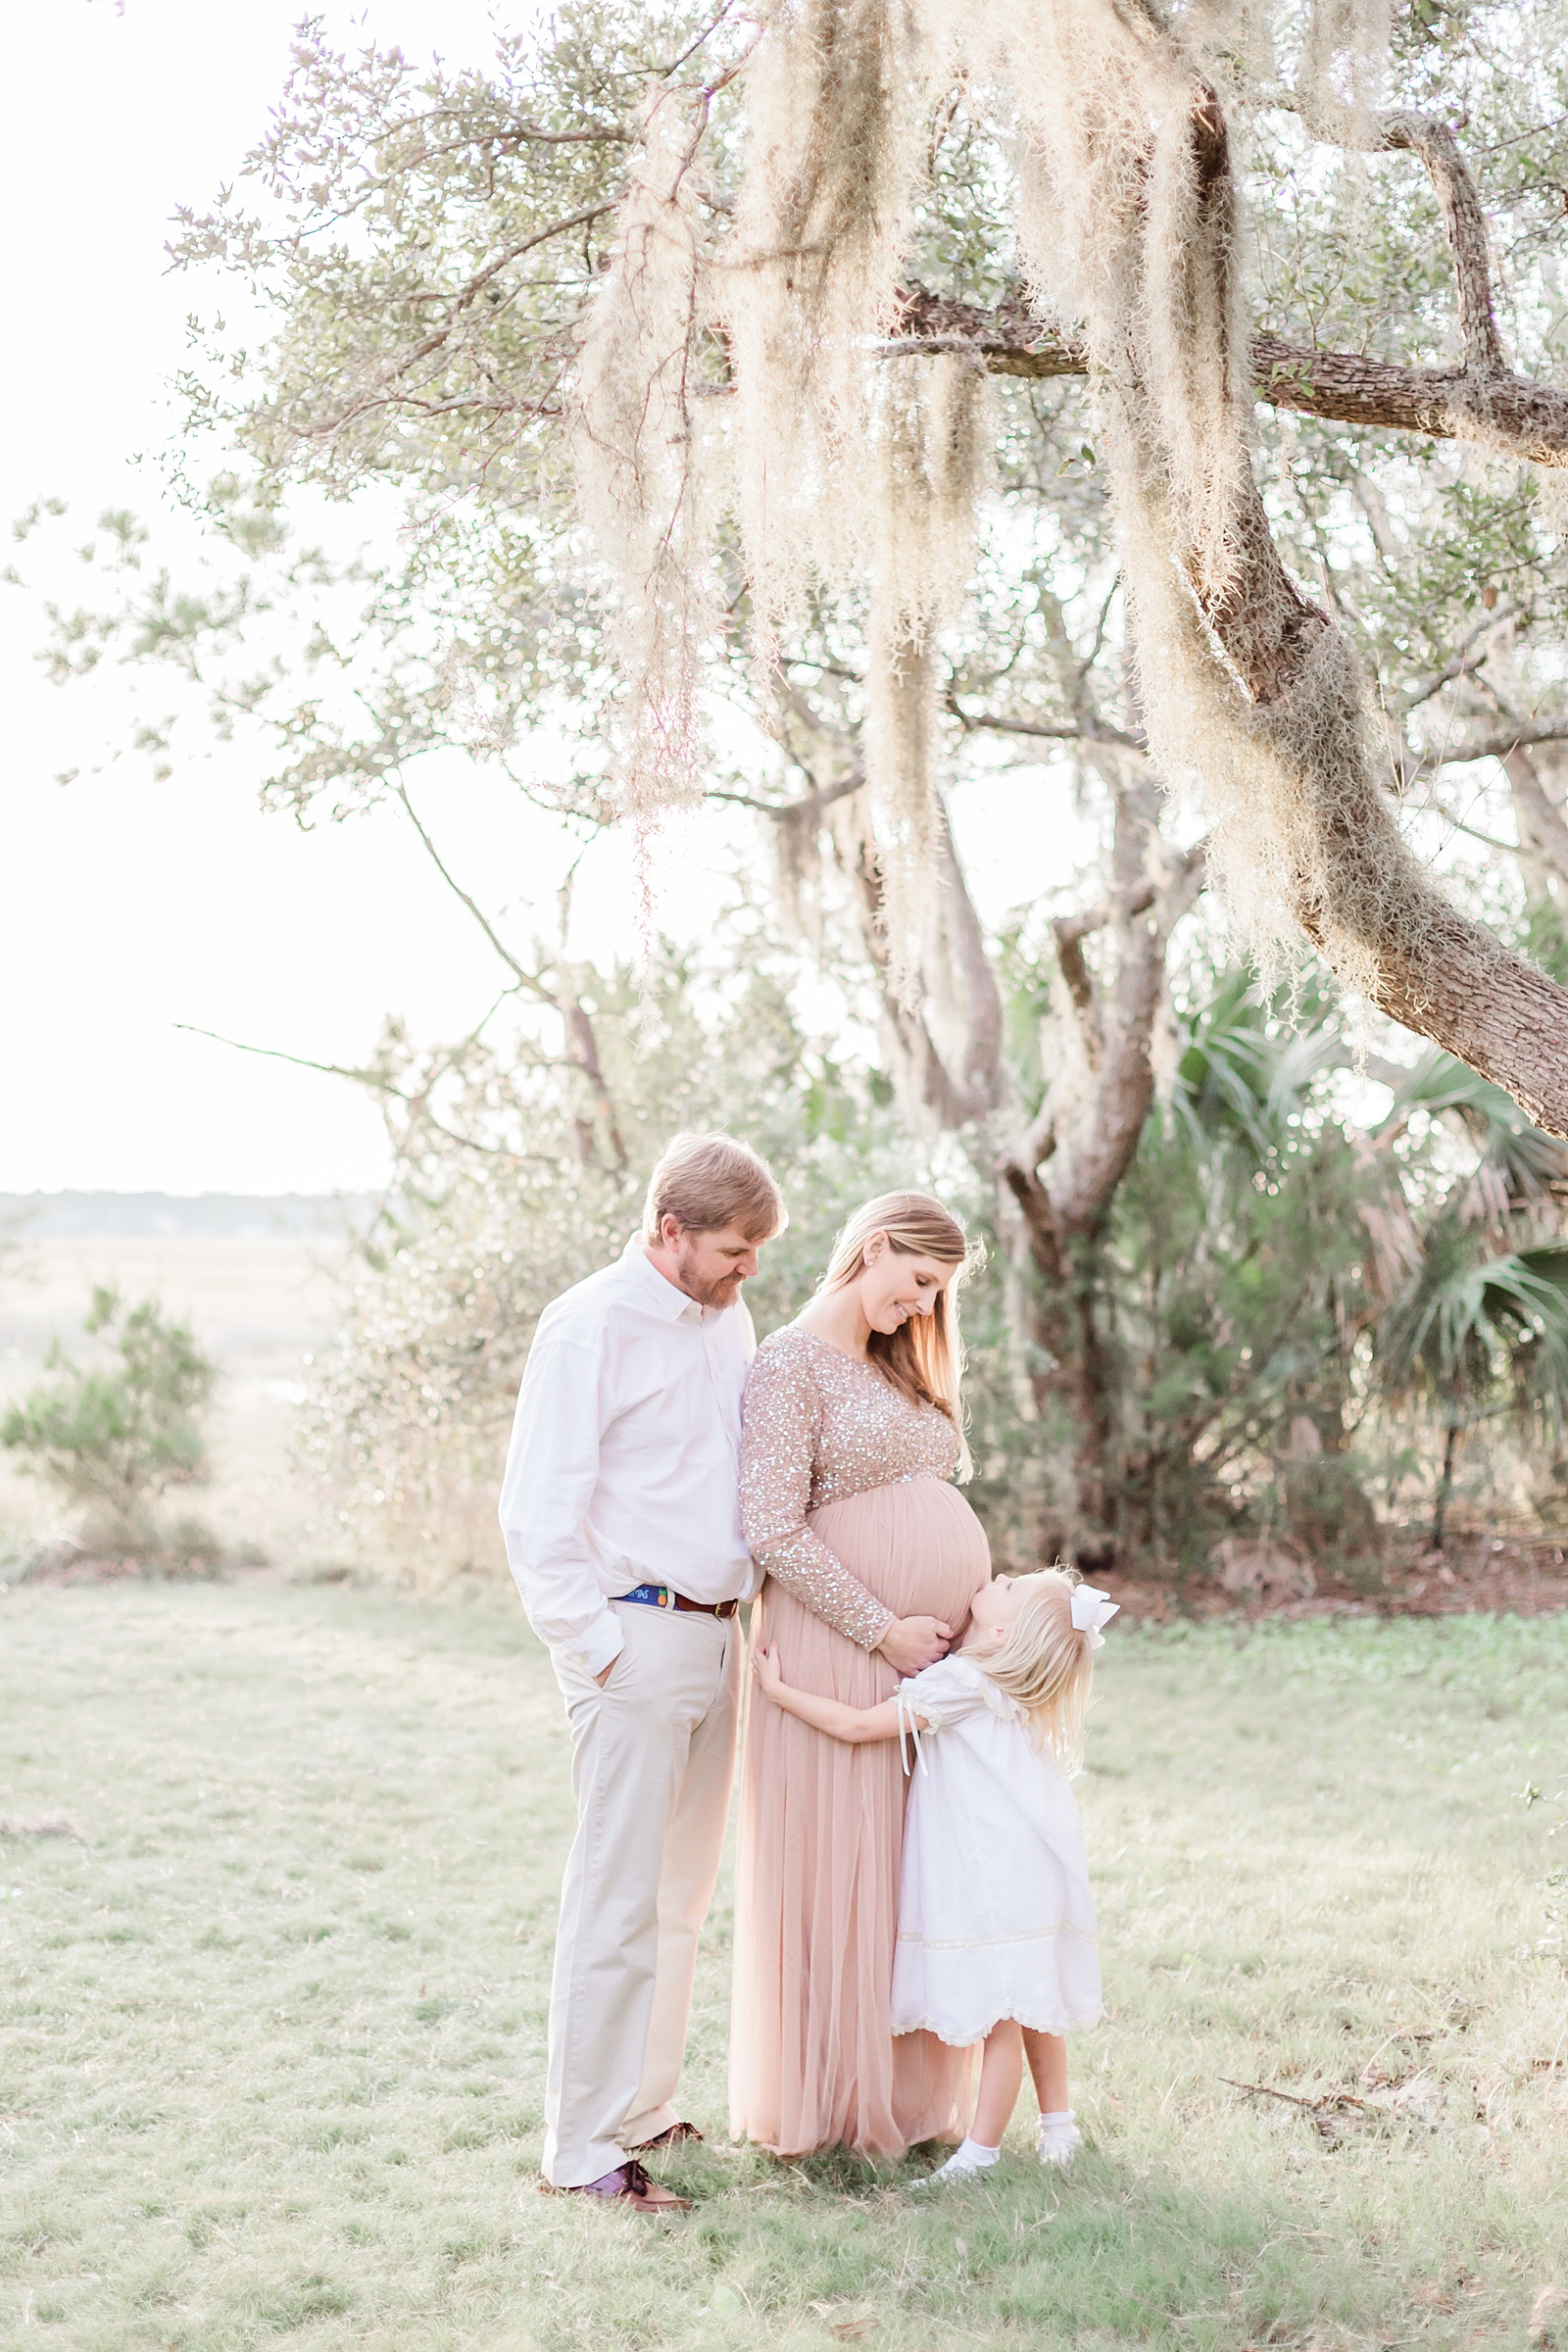 Charleston Maternity session at James Island County Park by Caitlyn Motycka Photography